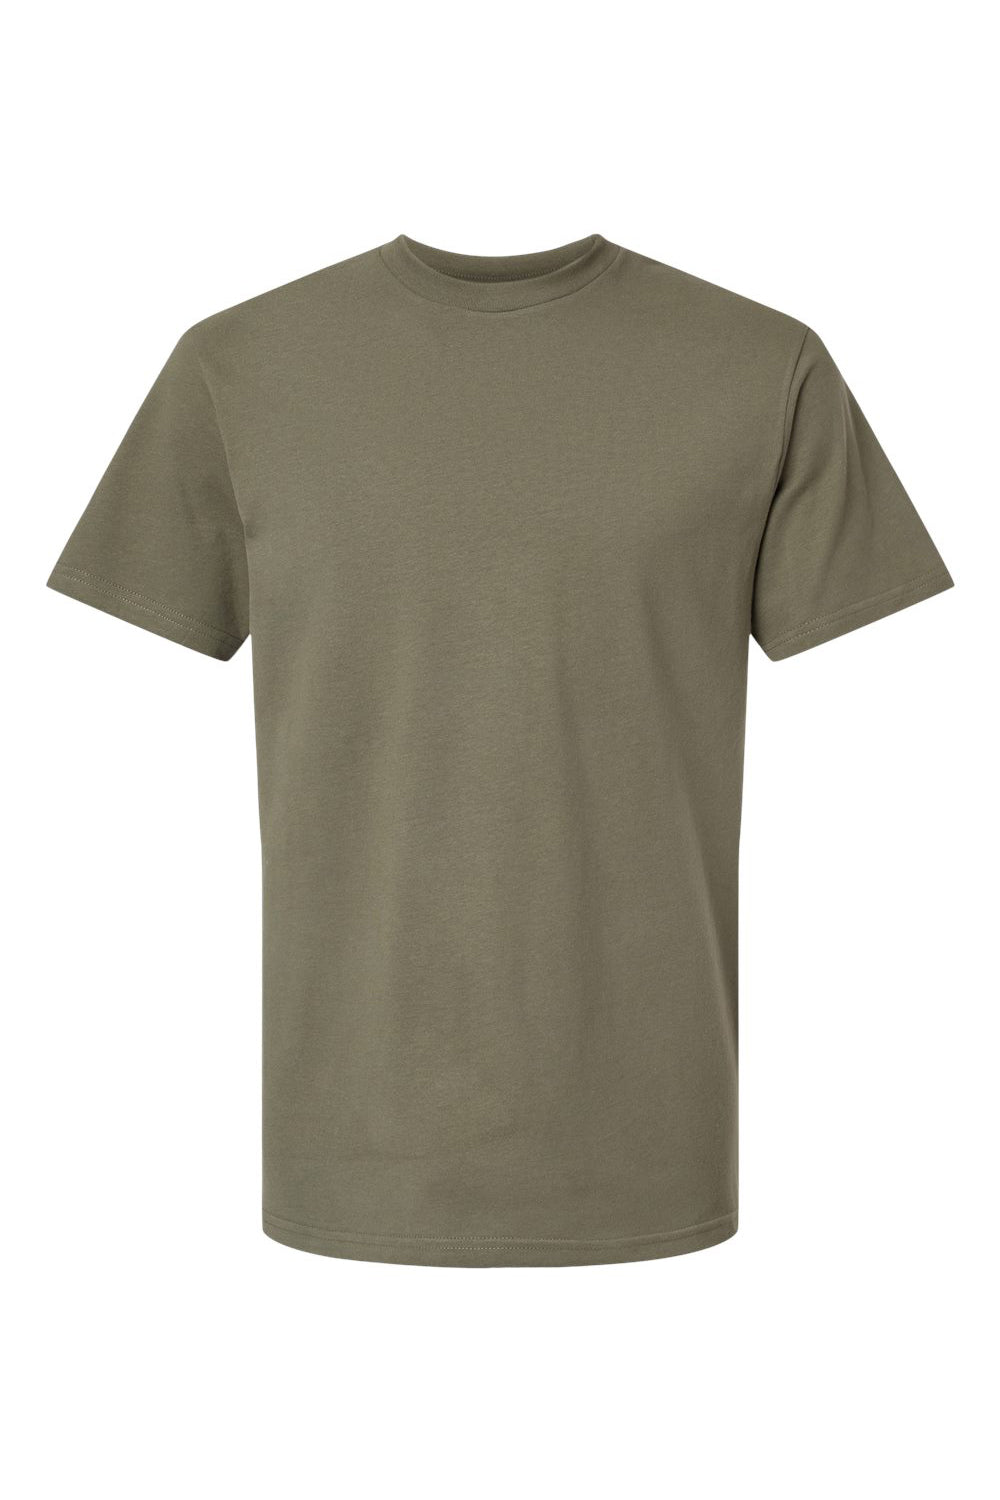 American Apparel 5389 Mens Sueded Cloud Short Sleeve Crewneck T-Shirt Sueded Lieutenant Flat Front